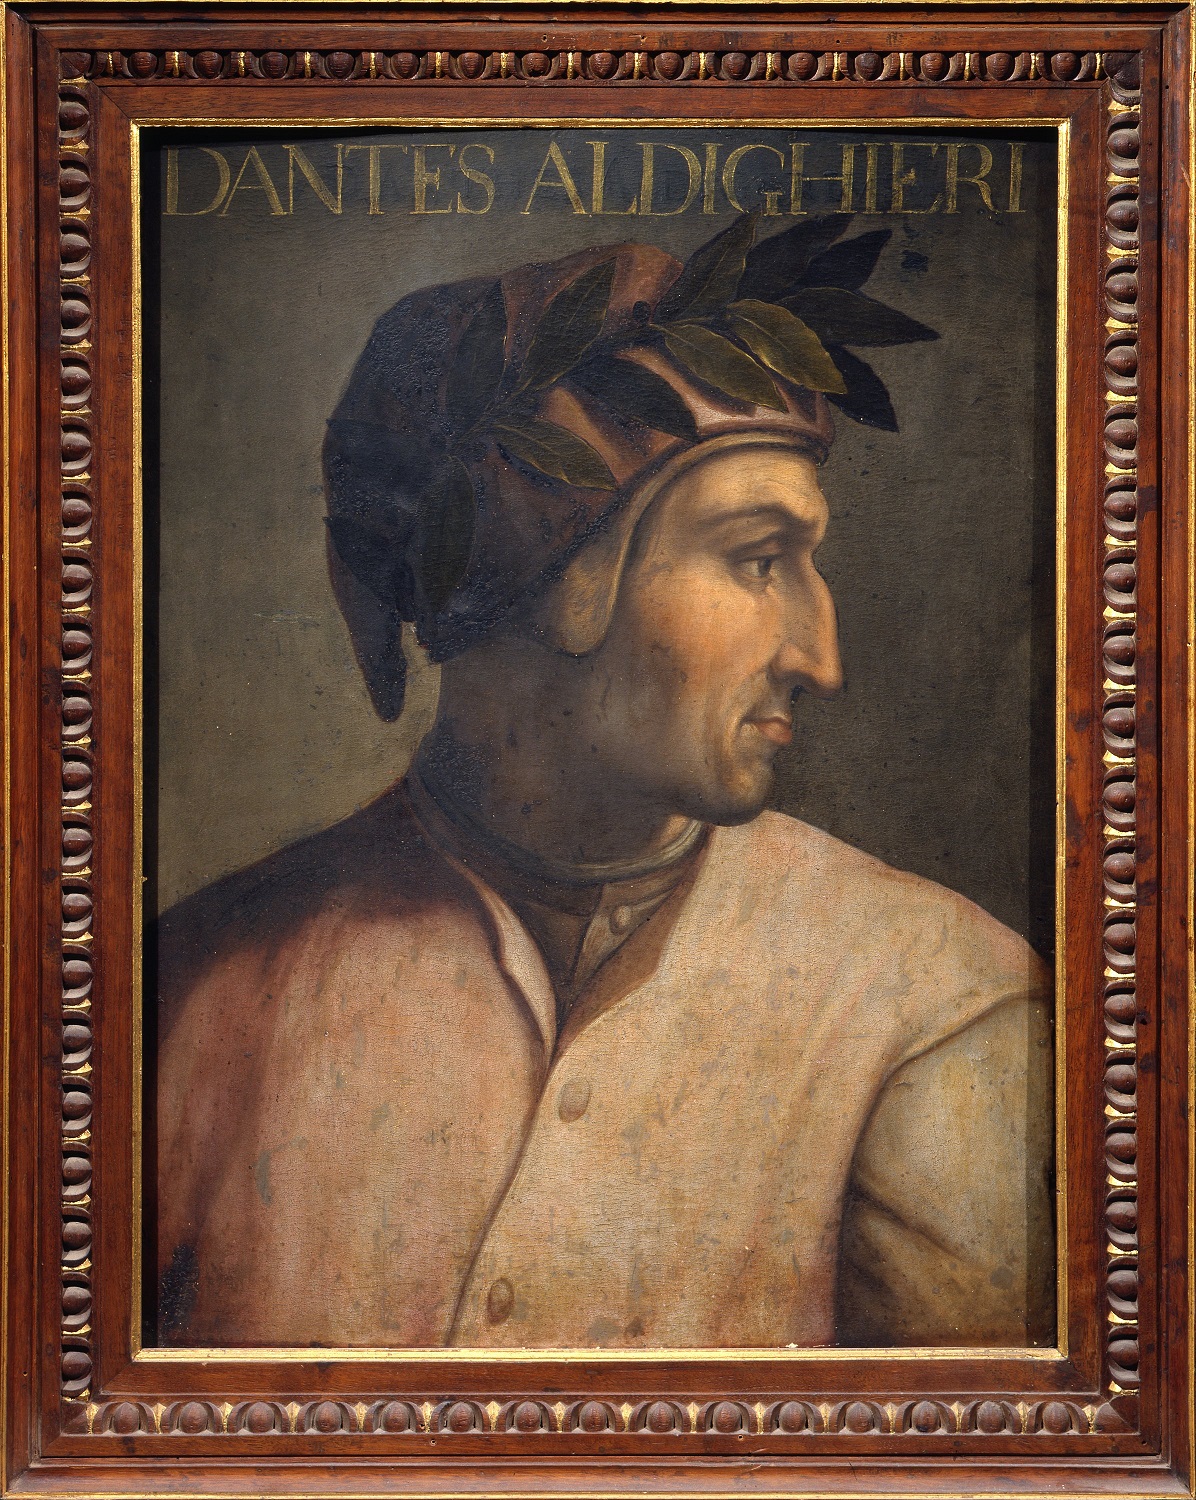 Dante. The vision of art